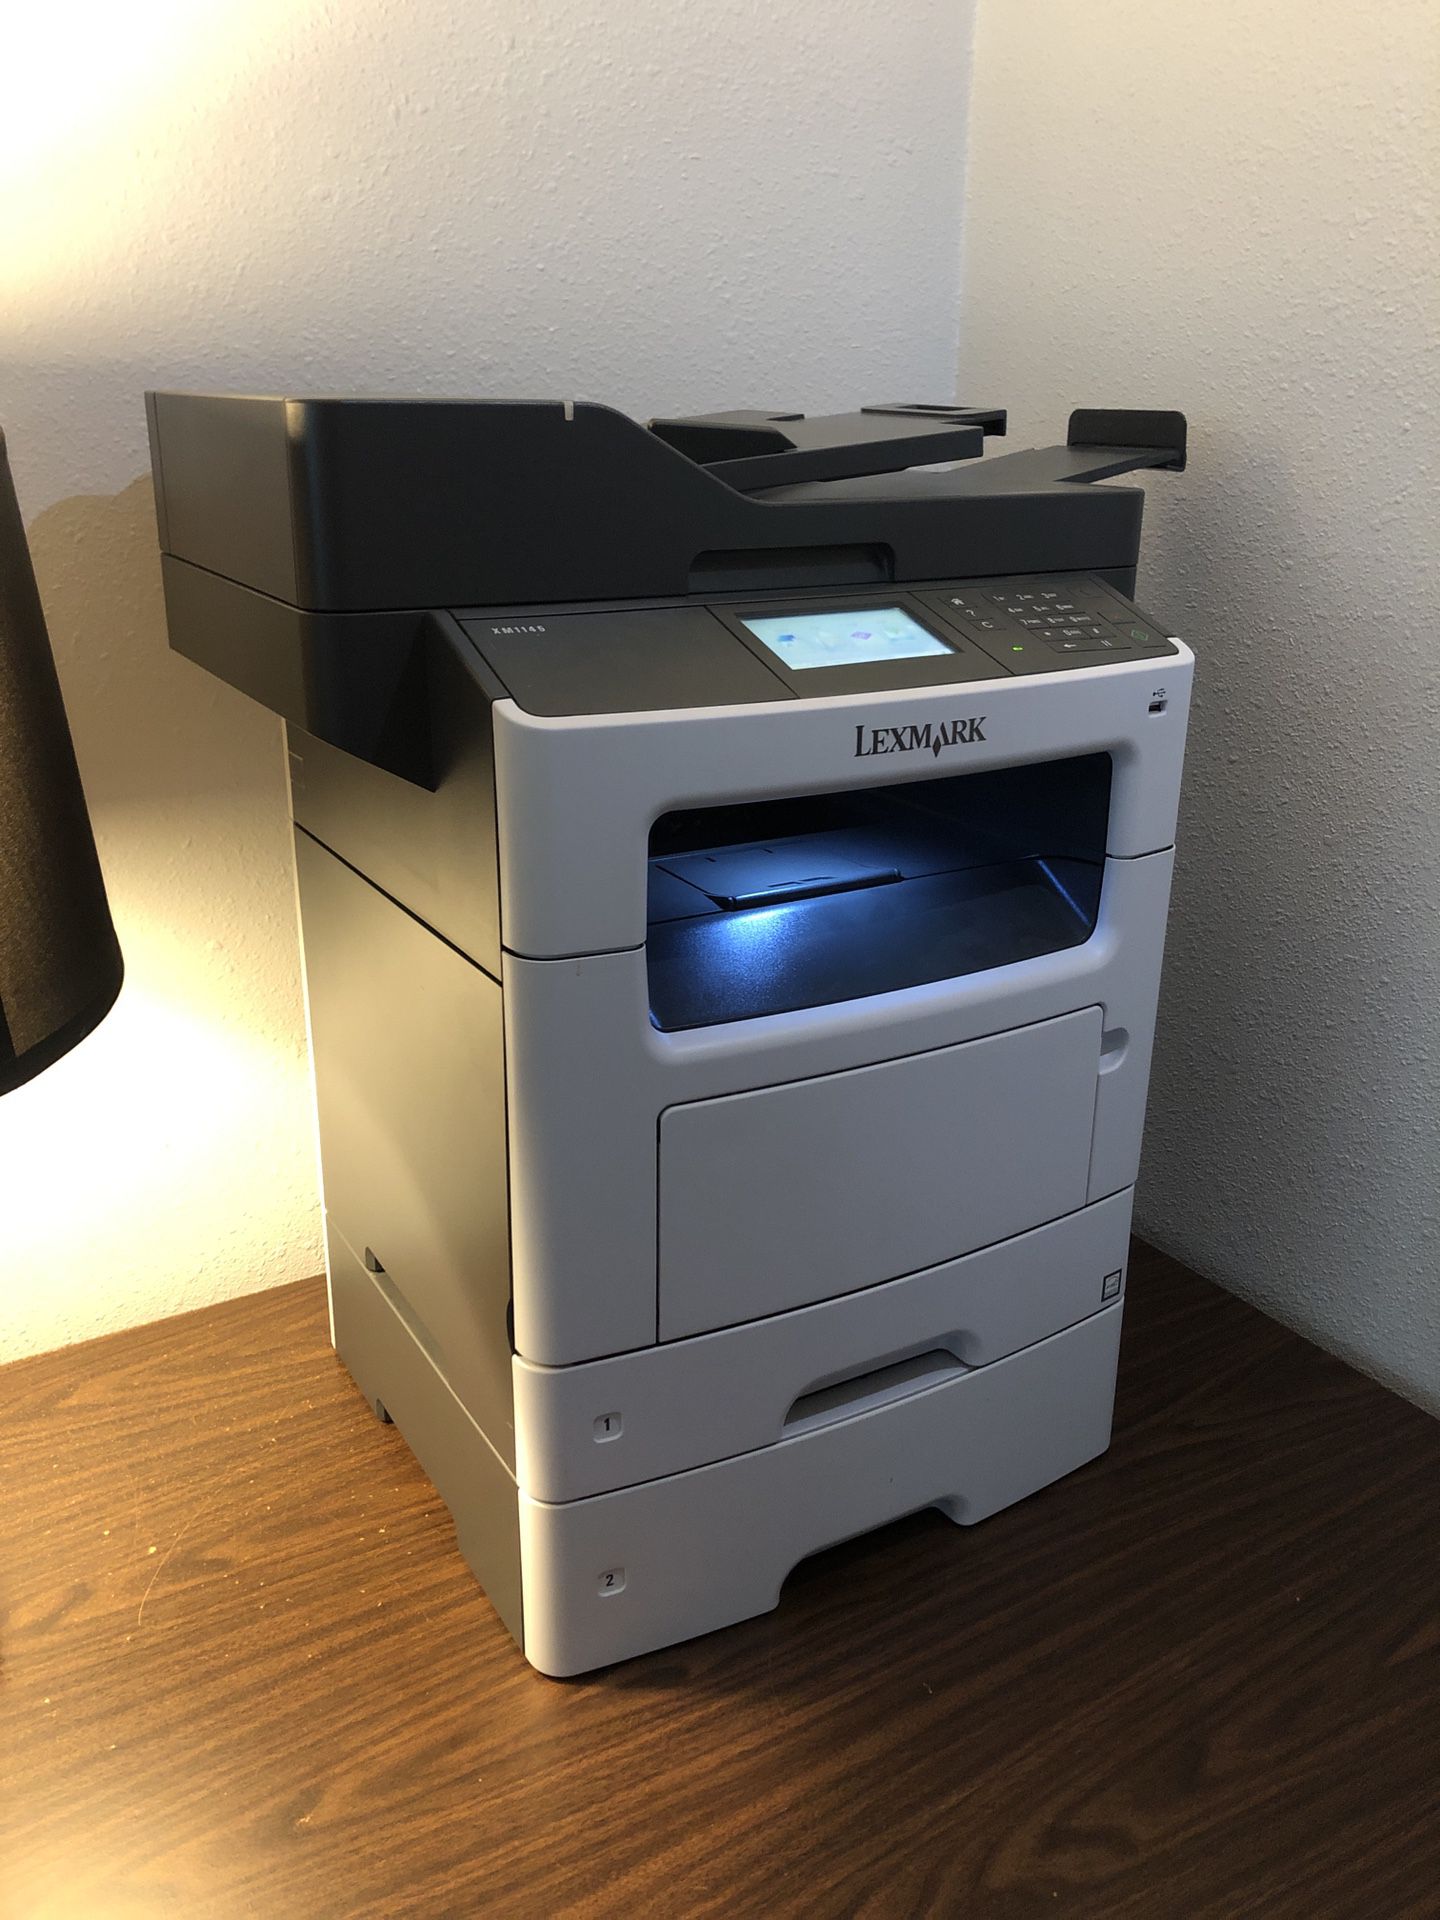 LEXMARK XM1145 Printer